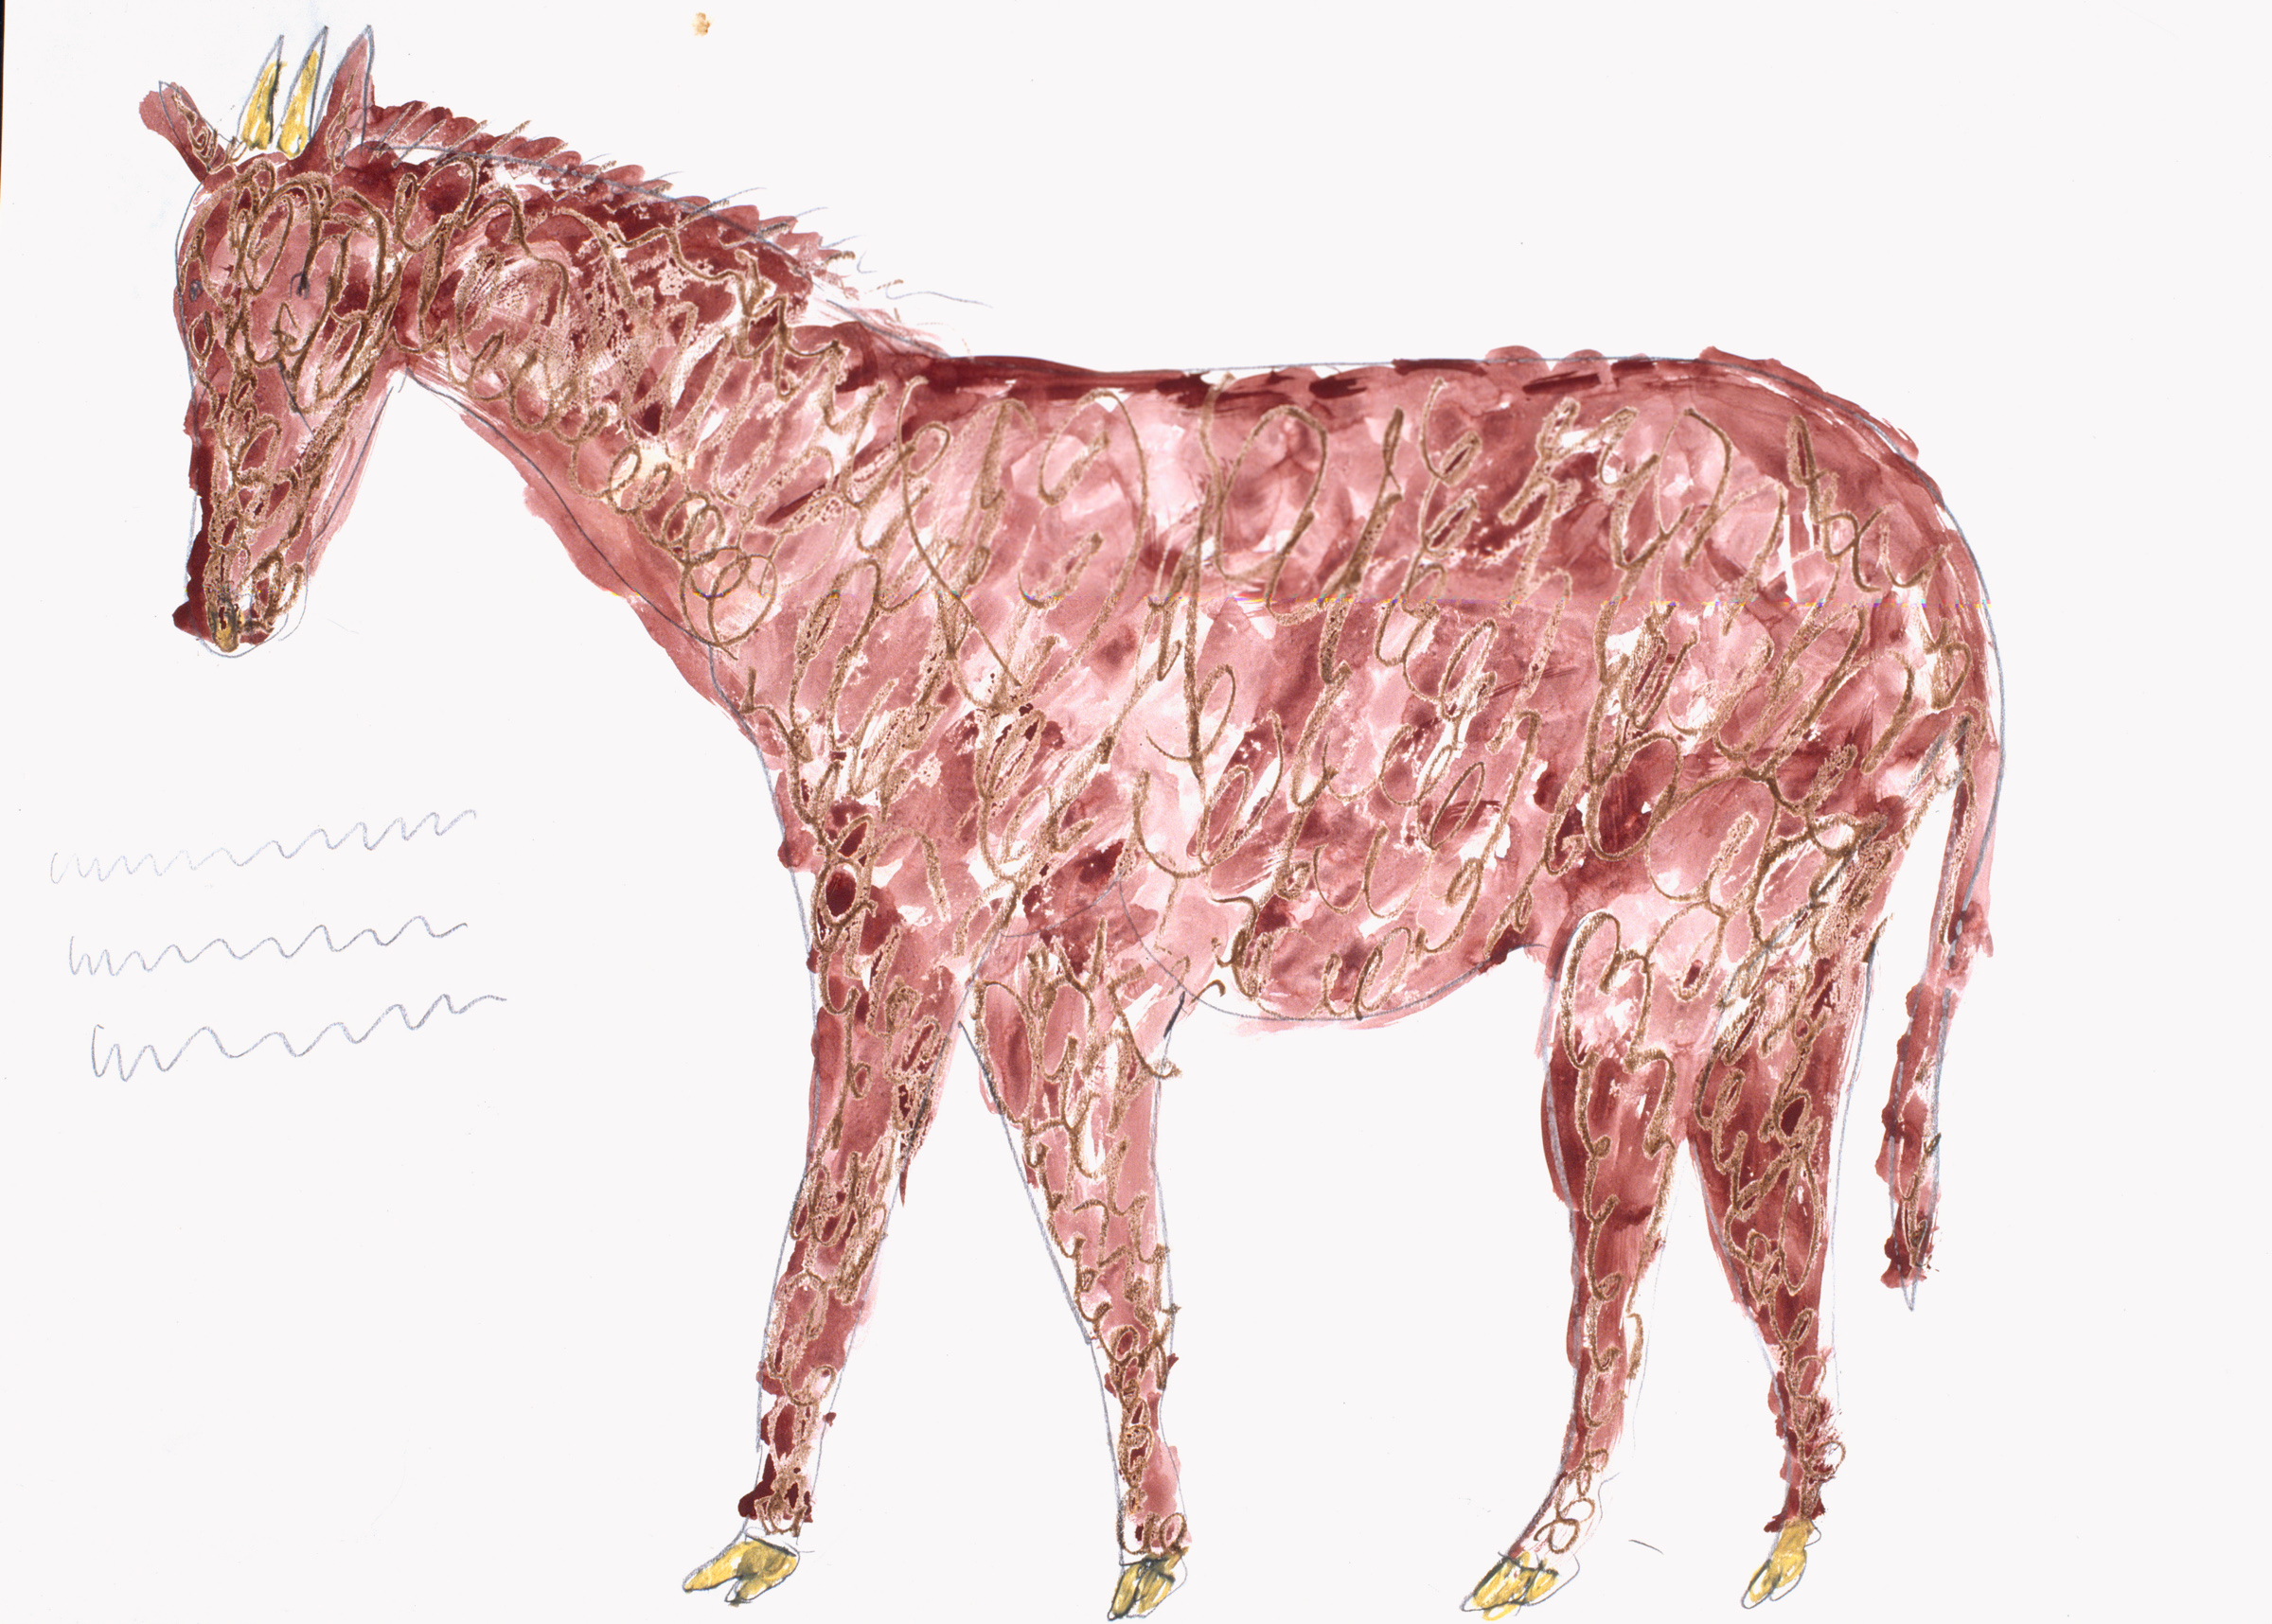 kamlander franz - Pferd / Horse